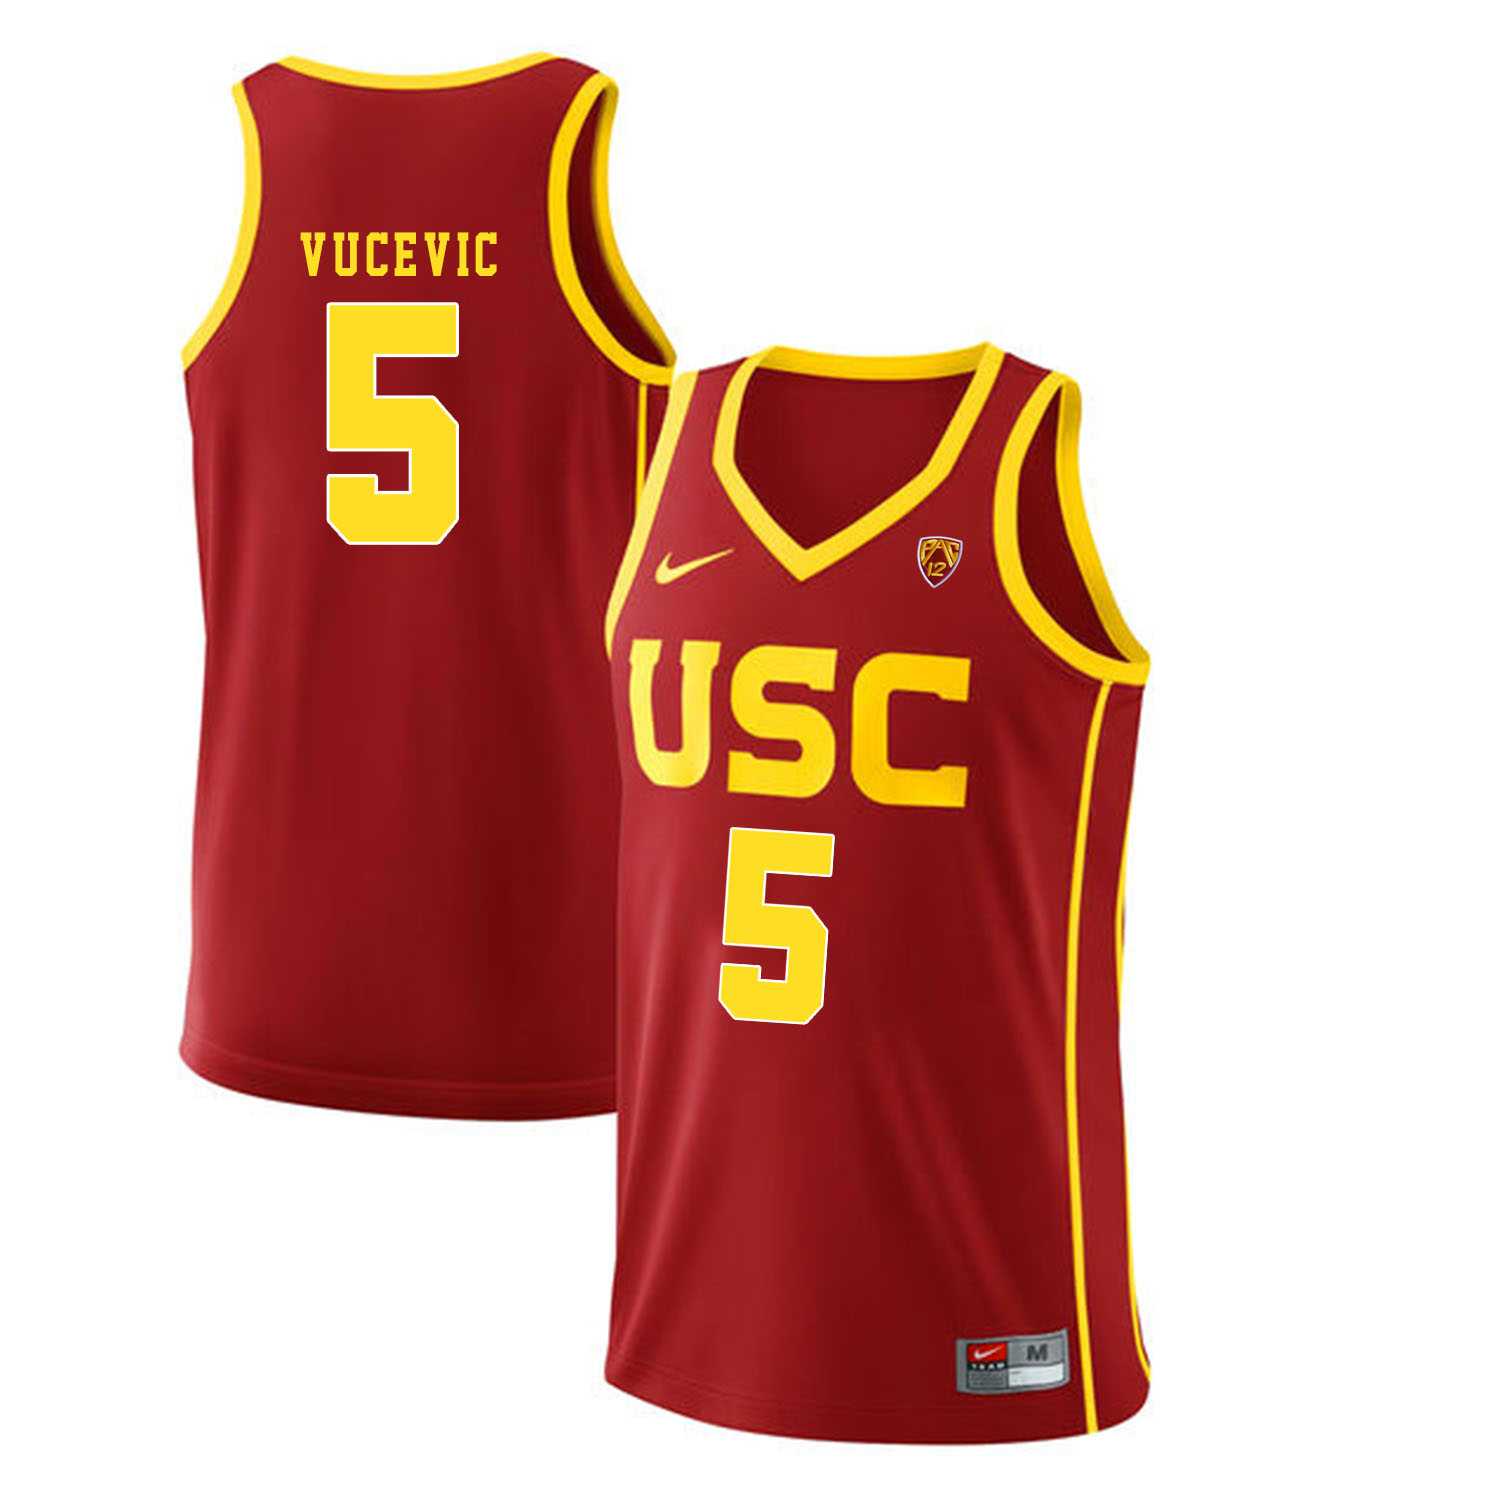 USC Trojans #5 Nikola Vucevic Red College Basketball Jersey